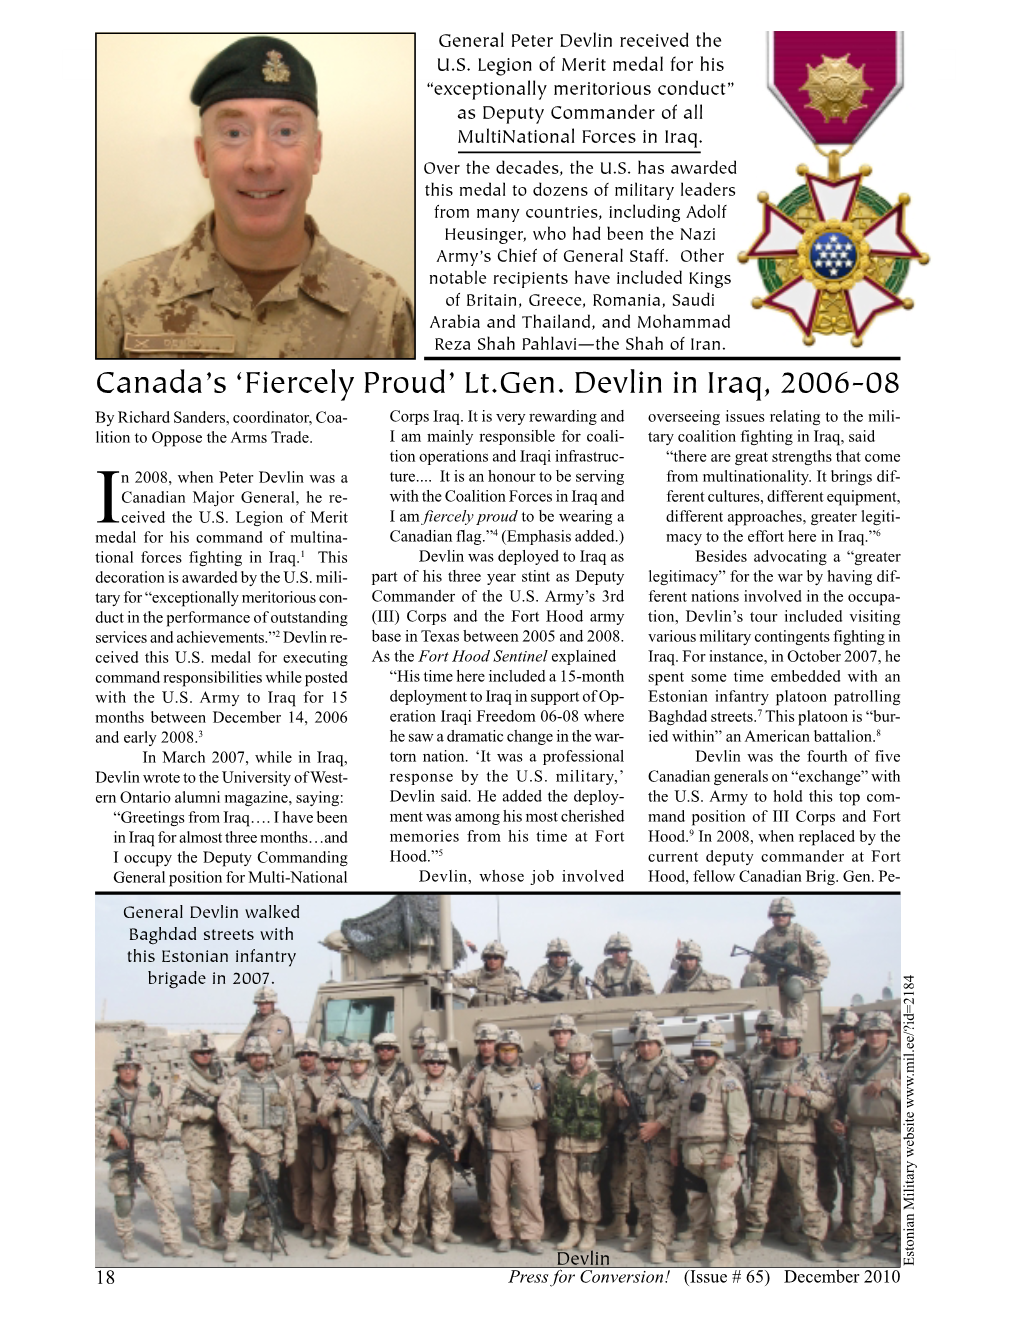 Lt.Gen. Devlin in Iraq, 2006-08 by Richard Sanders, Coordinator, Coa- Corps Iraq